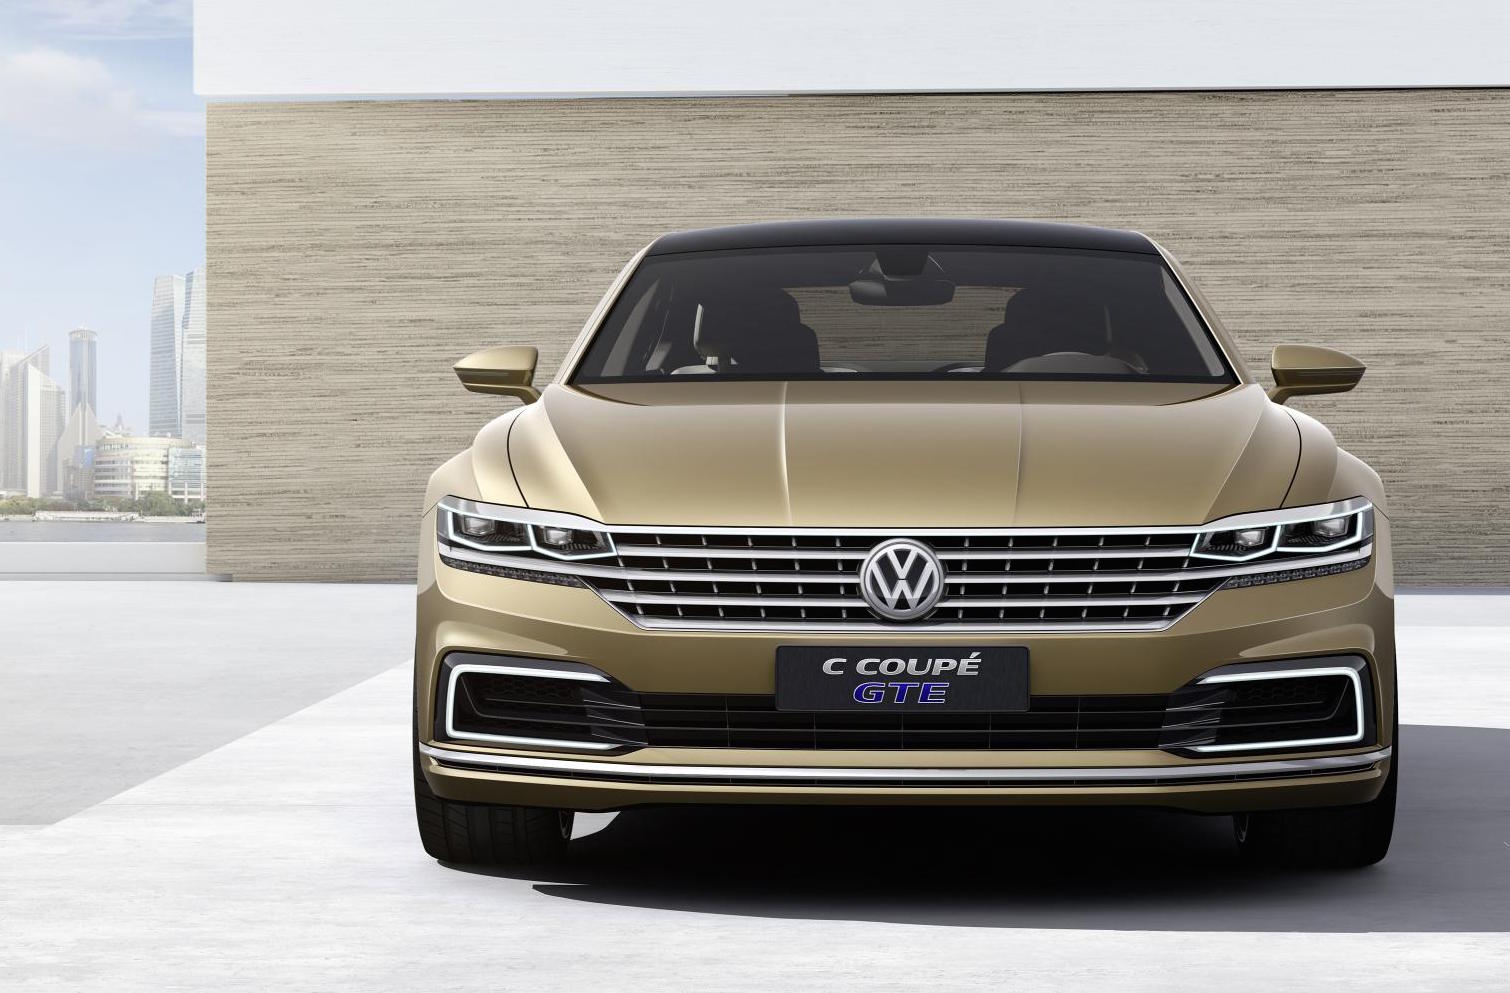 Electric Volkswagen Phaeton confirmed, plans for more EV technology outlined